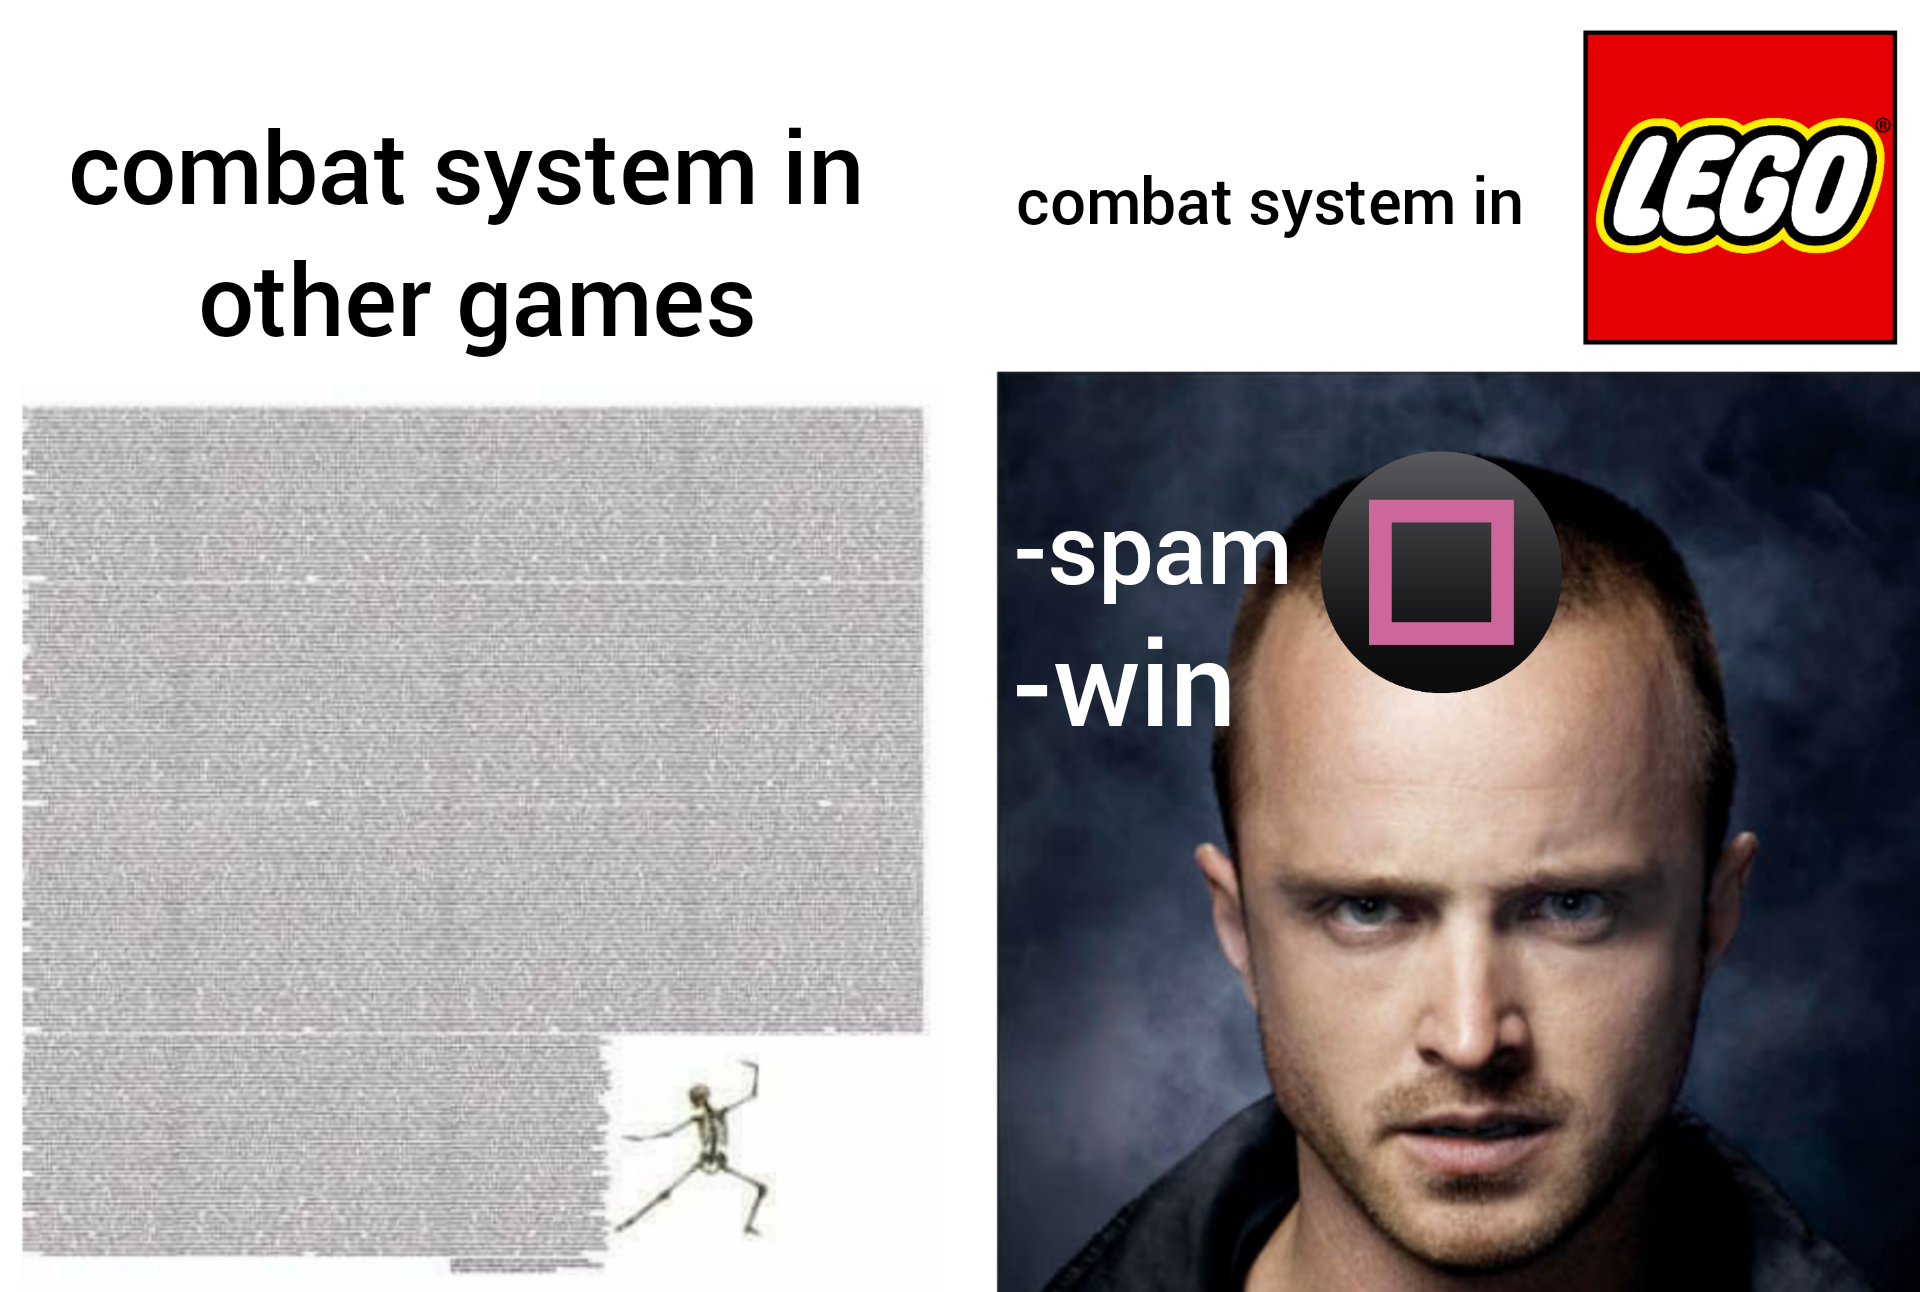 dank memes - viktor troicki aaron paul - combat system in combat system in Lego other games spam win